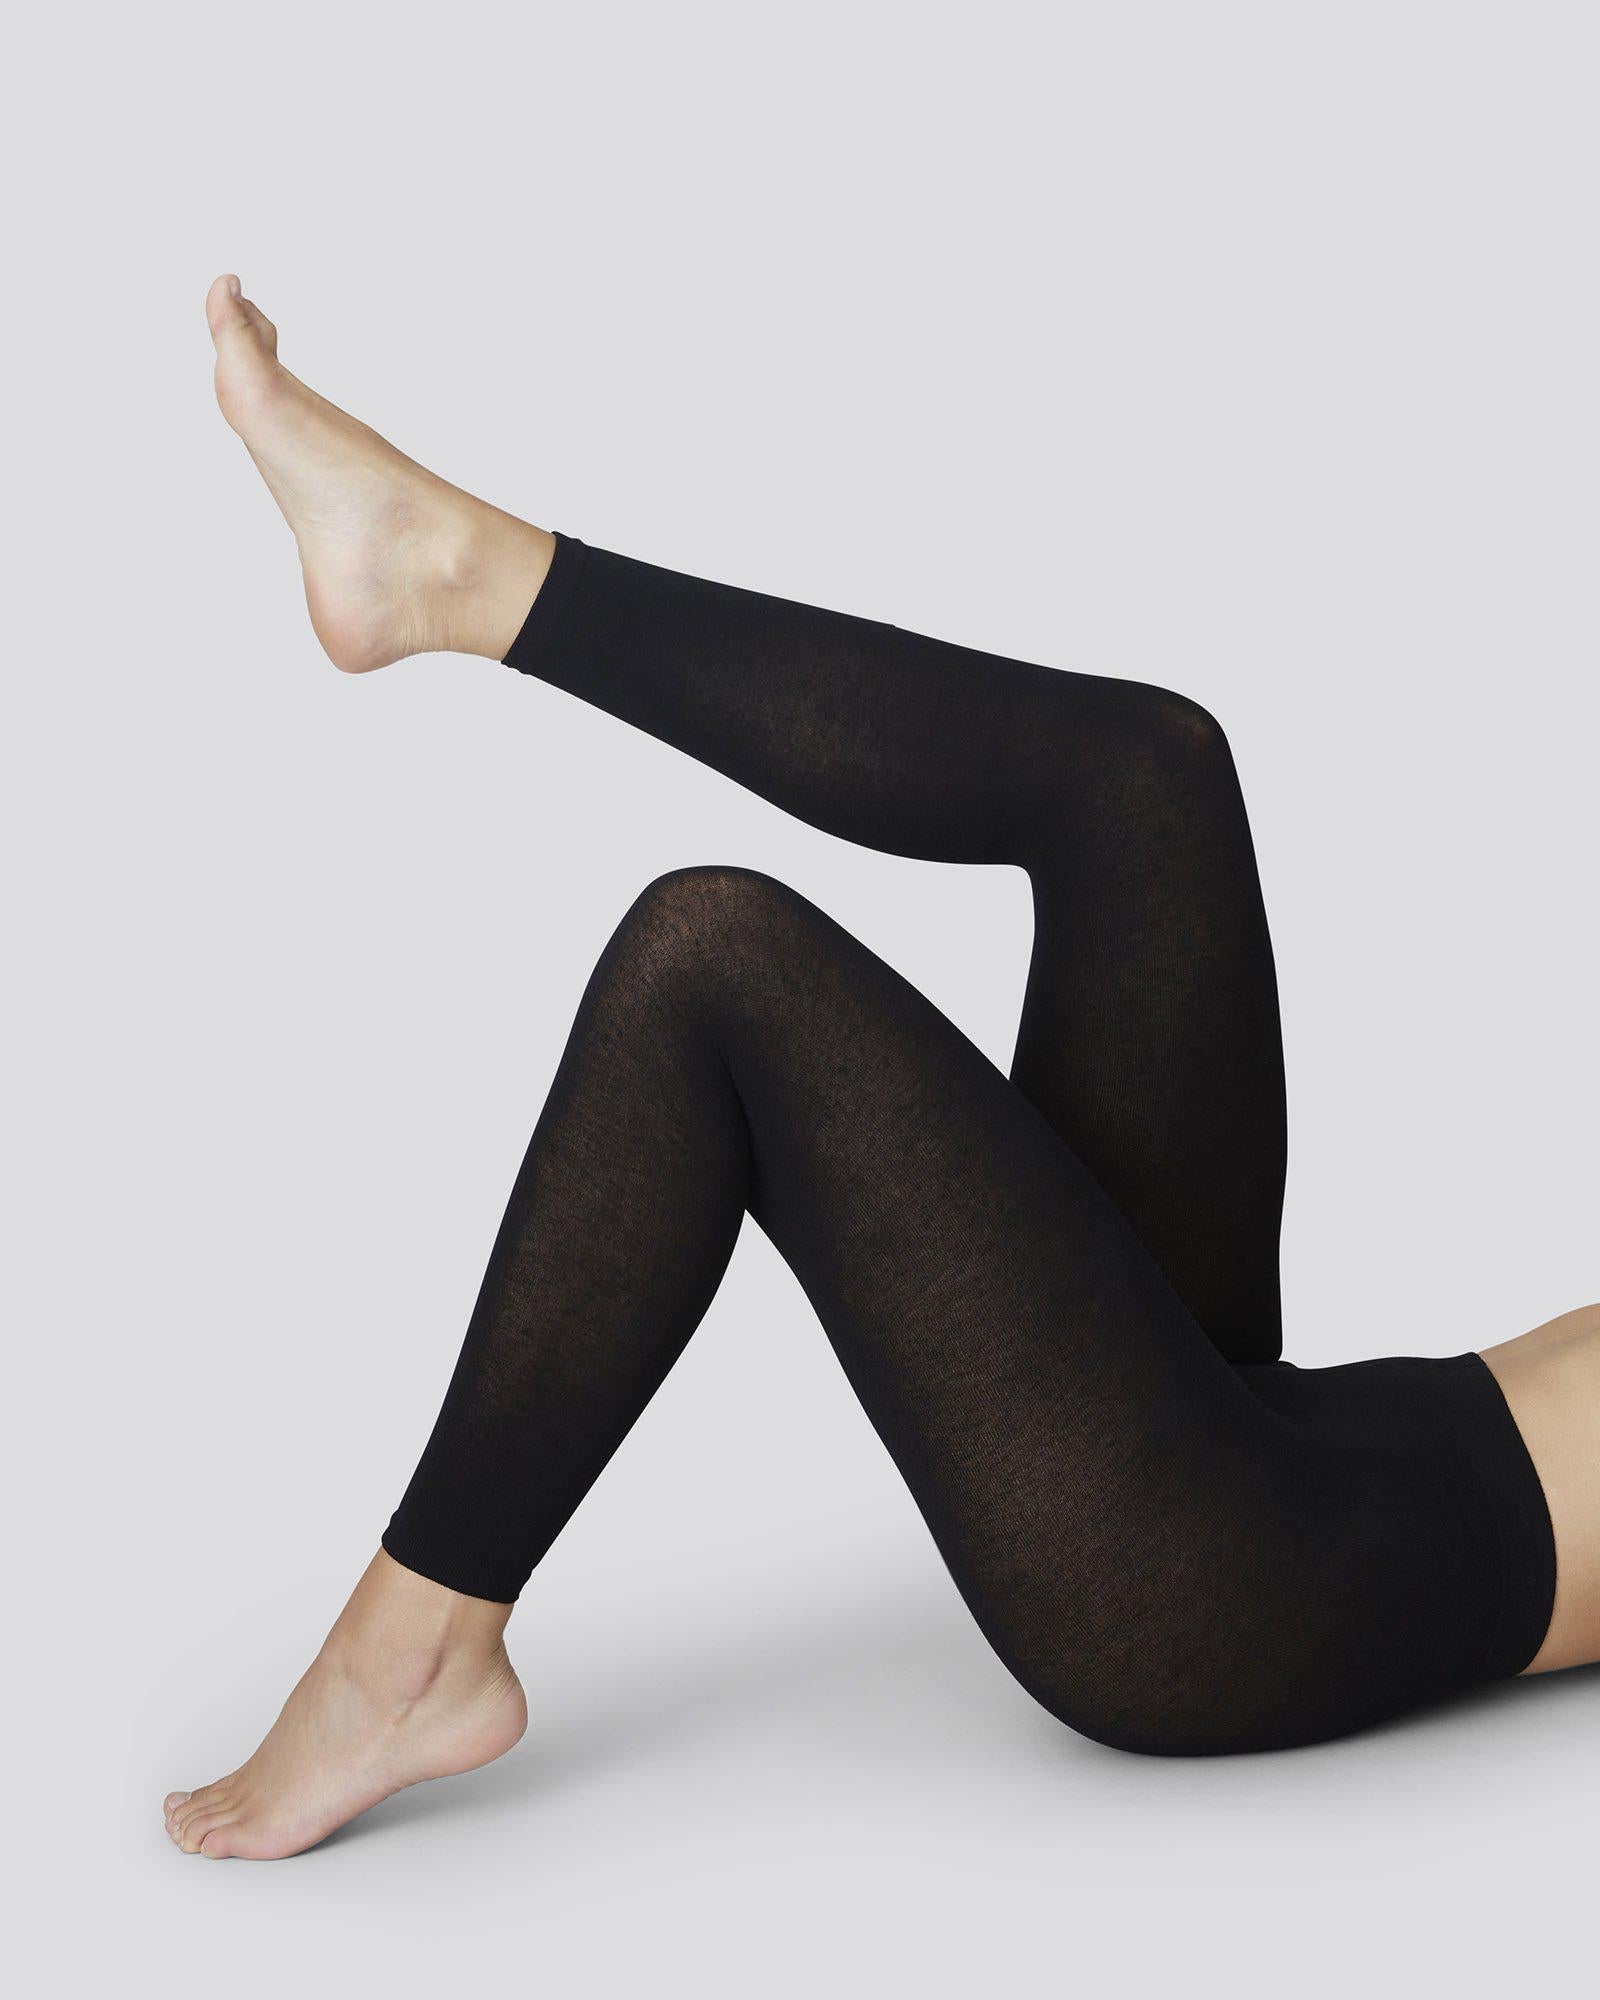 Alice Cashmere Leggings Black | Shop now - Swedish Stockings